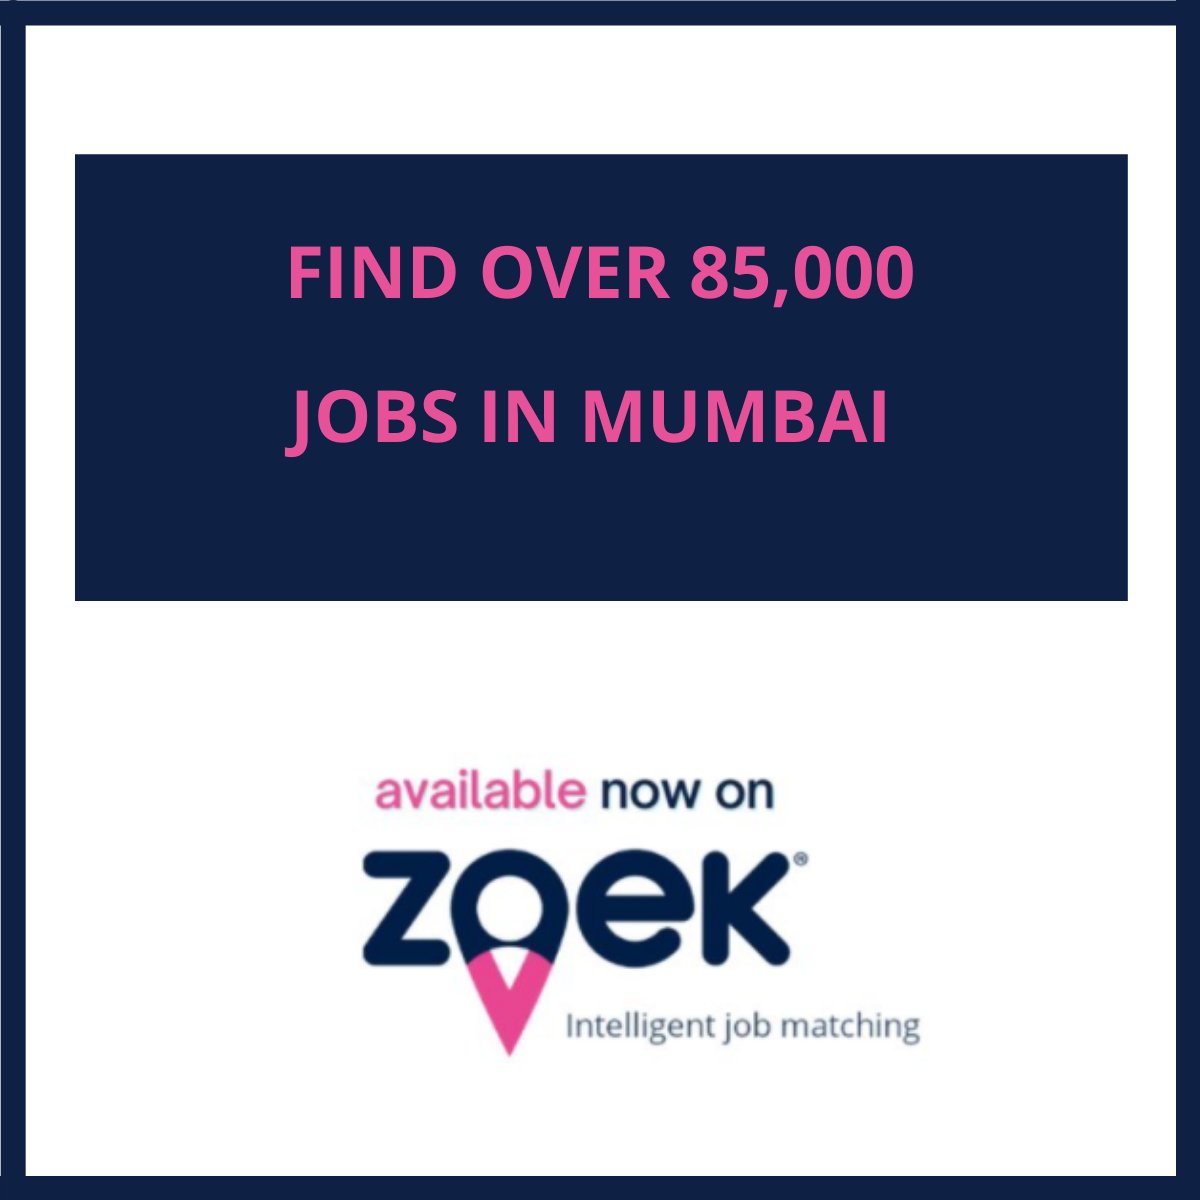 💼 Search from over 85,000 #Jobs In Mumbai on Zoek & APPLY TODAY!

🔎View all Mumbai jobs: bit.ly/3ffyVap

#zoek #jobboard #mumbai #mumbaijob #jobsinmumbai #hiringnow #companieshiring #jobhunting #jobsearch #newjob #jobopportunities #findmumbaijobs